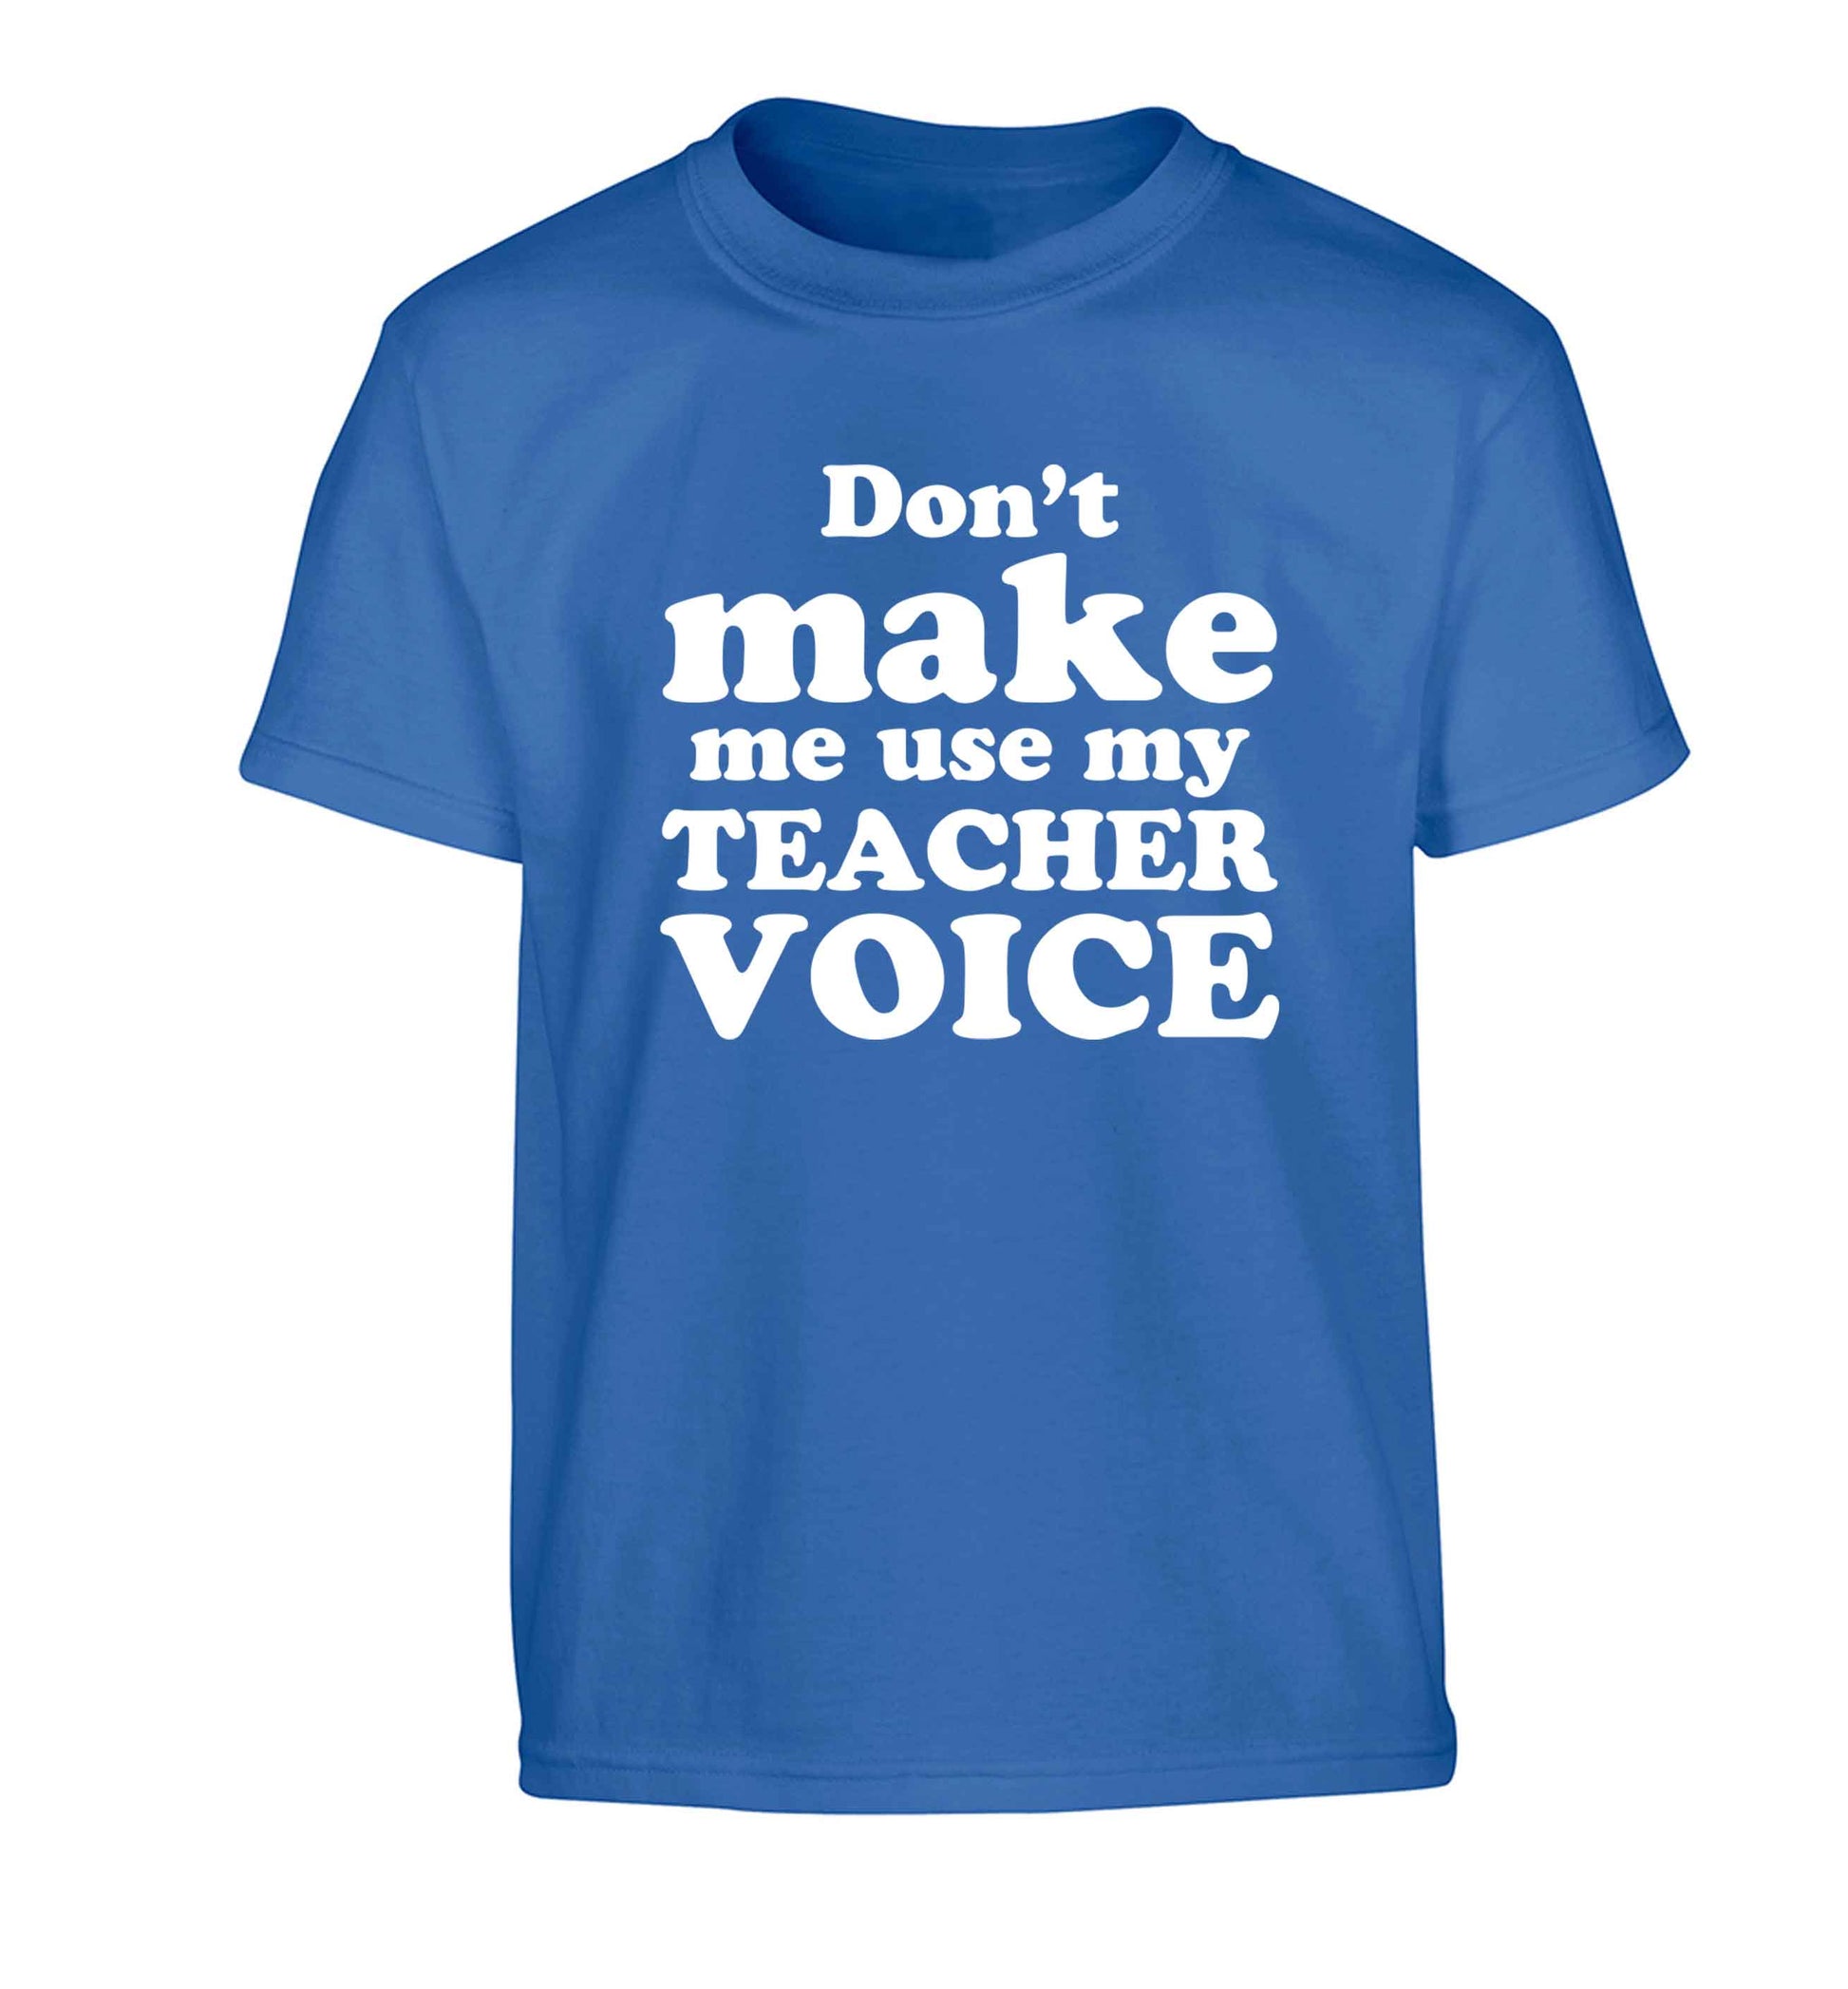 Don't make me use my teacher voice Children's blue Tshirt 12-13 Years